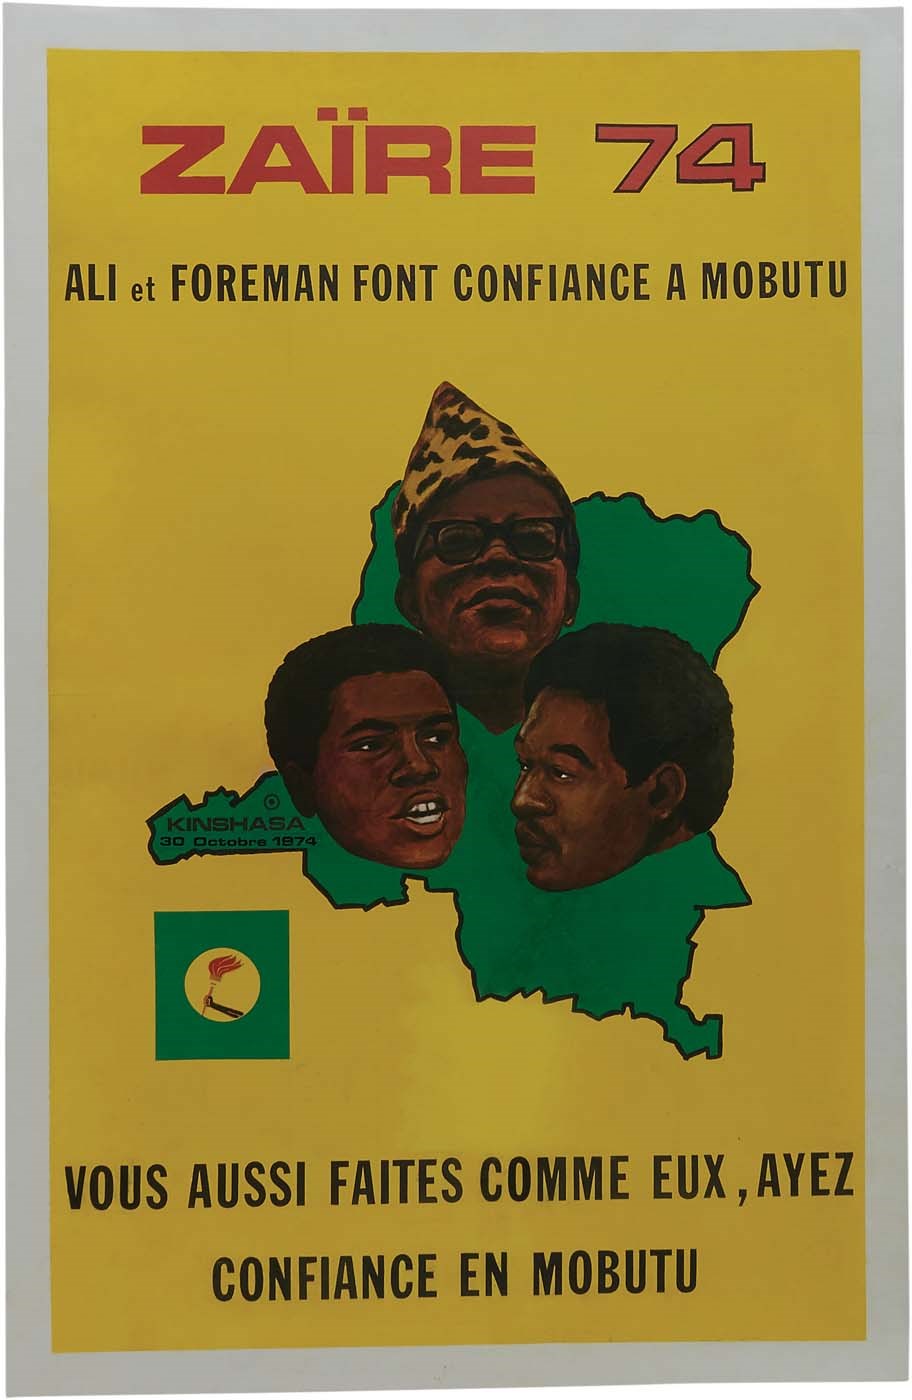 Muhammad Ali & Boxing - Muhammad Ali v. George Foreman On Site Poster (1974)